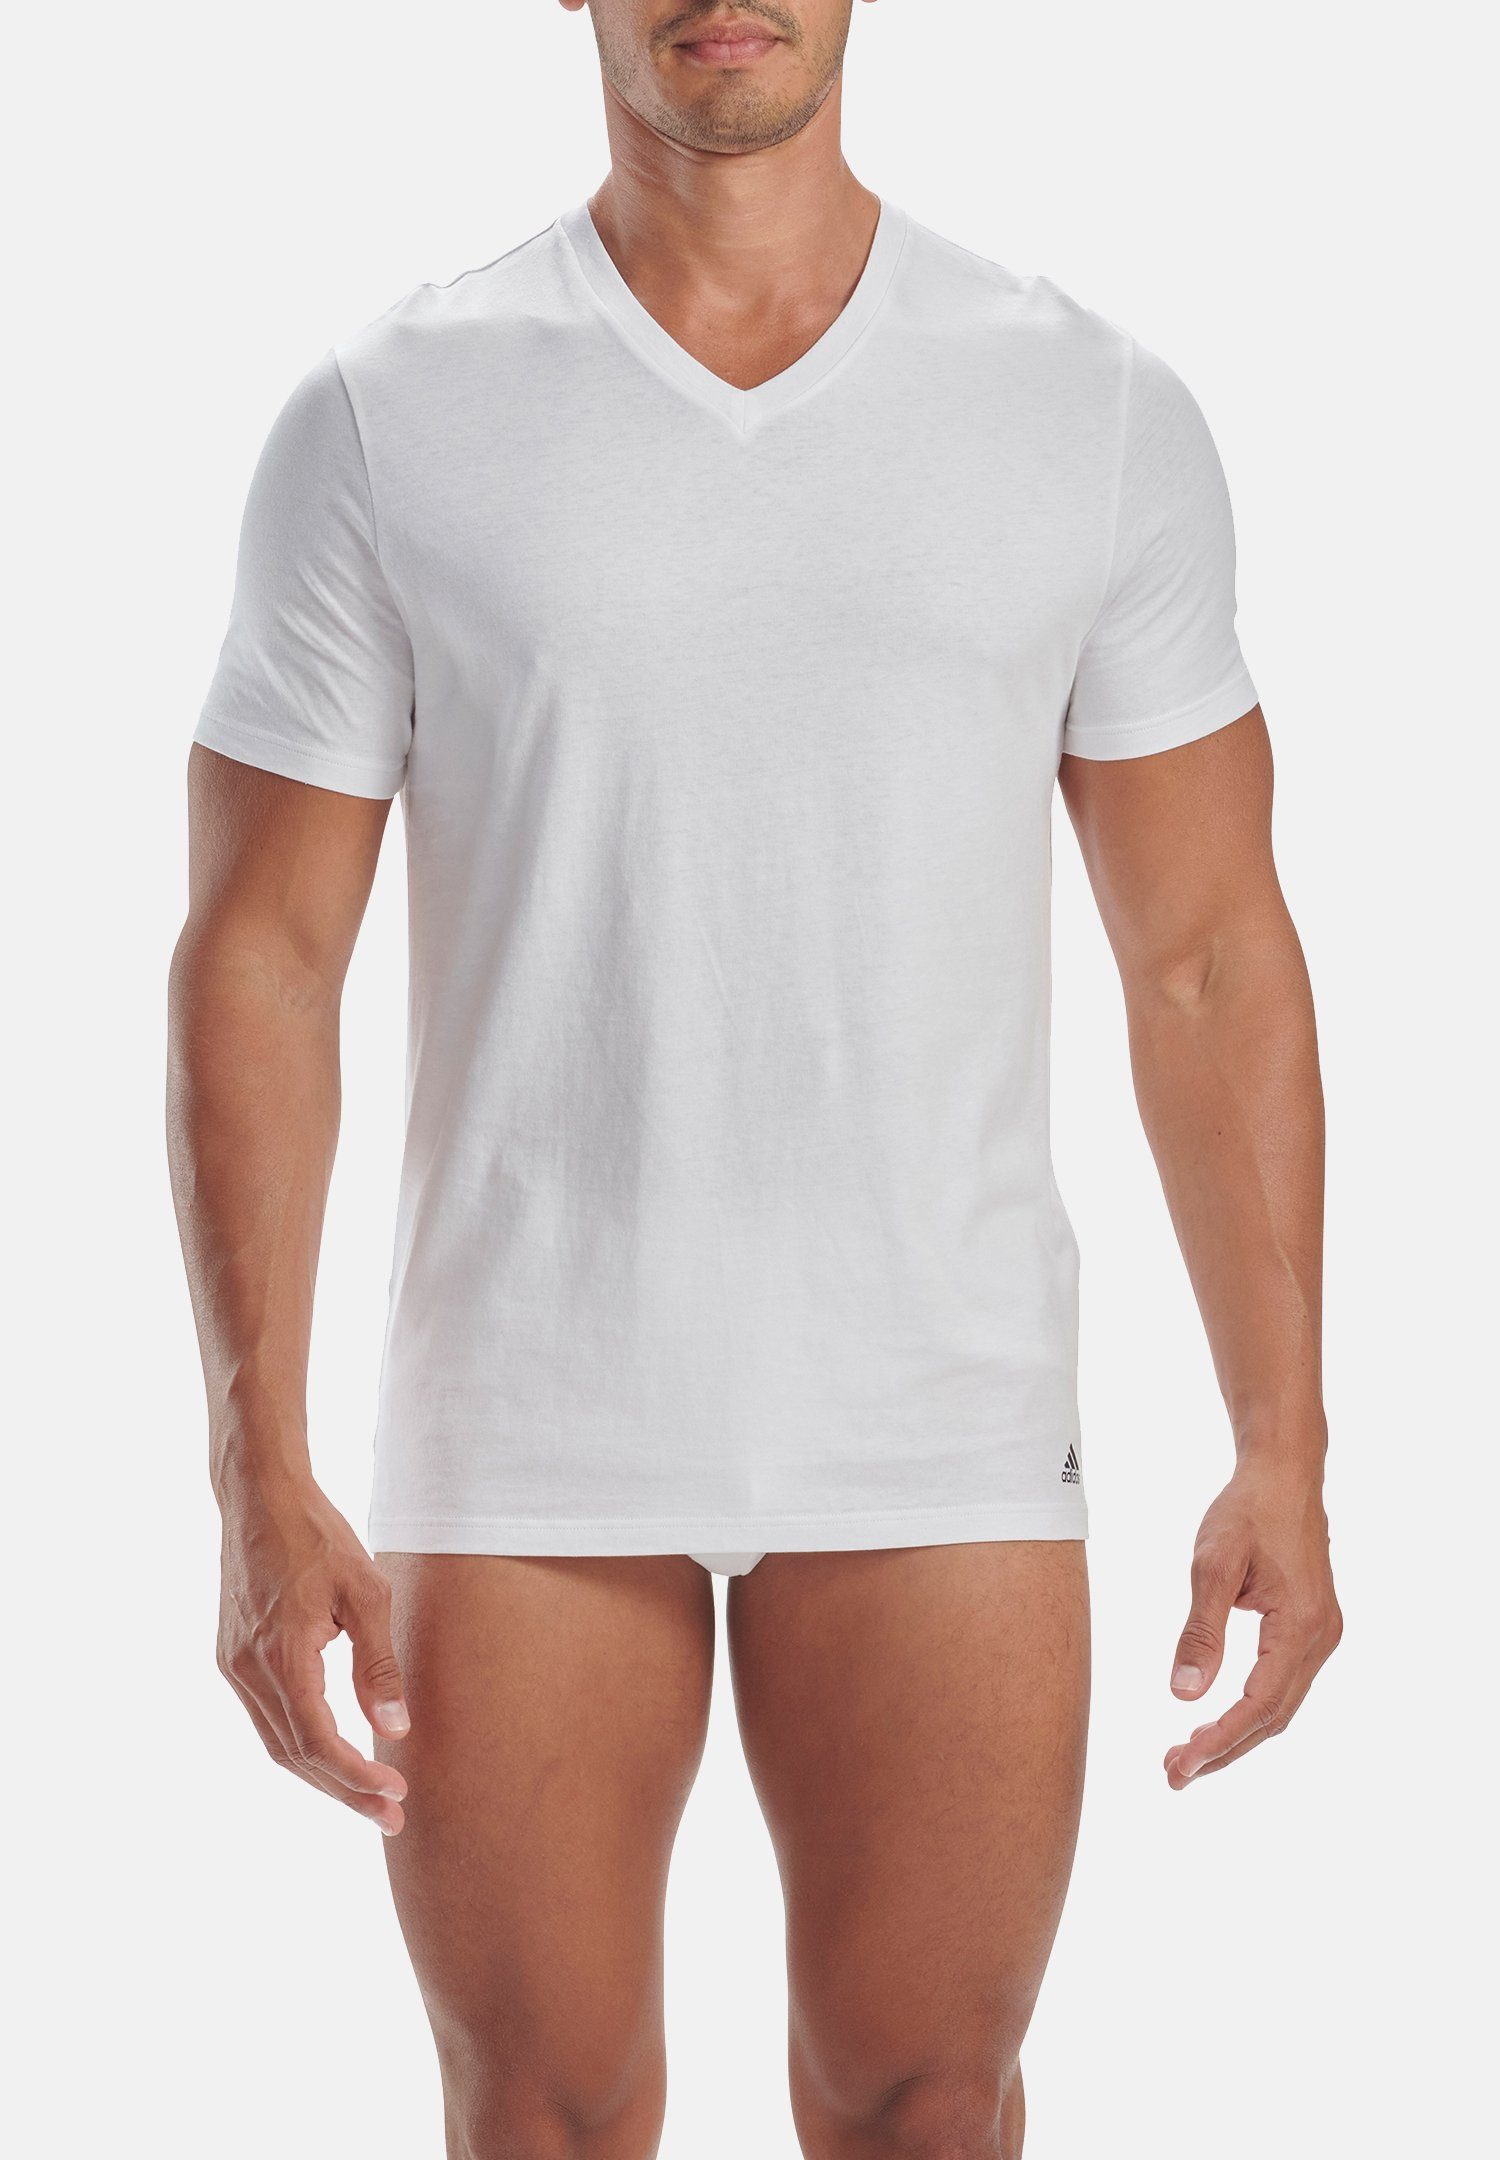 Poloshirt White (4PK) T-Shirt V-Neck Performance adidas